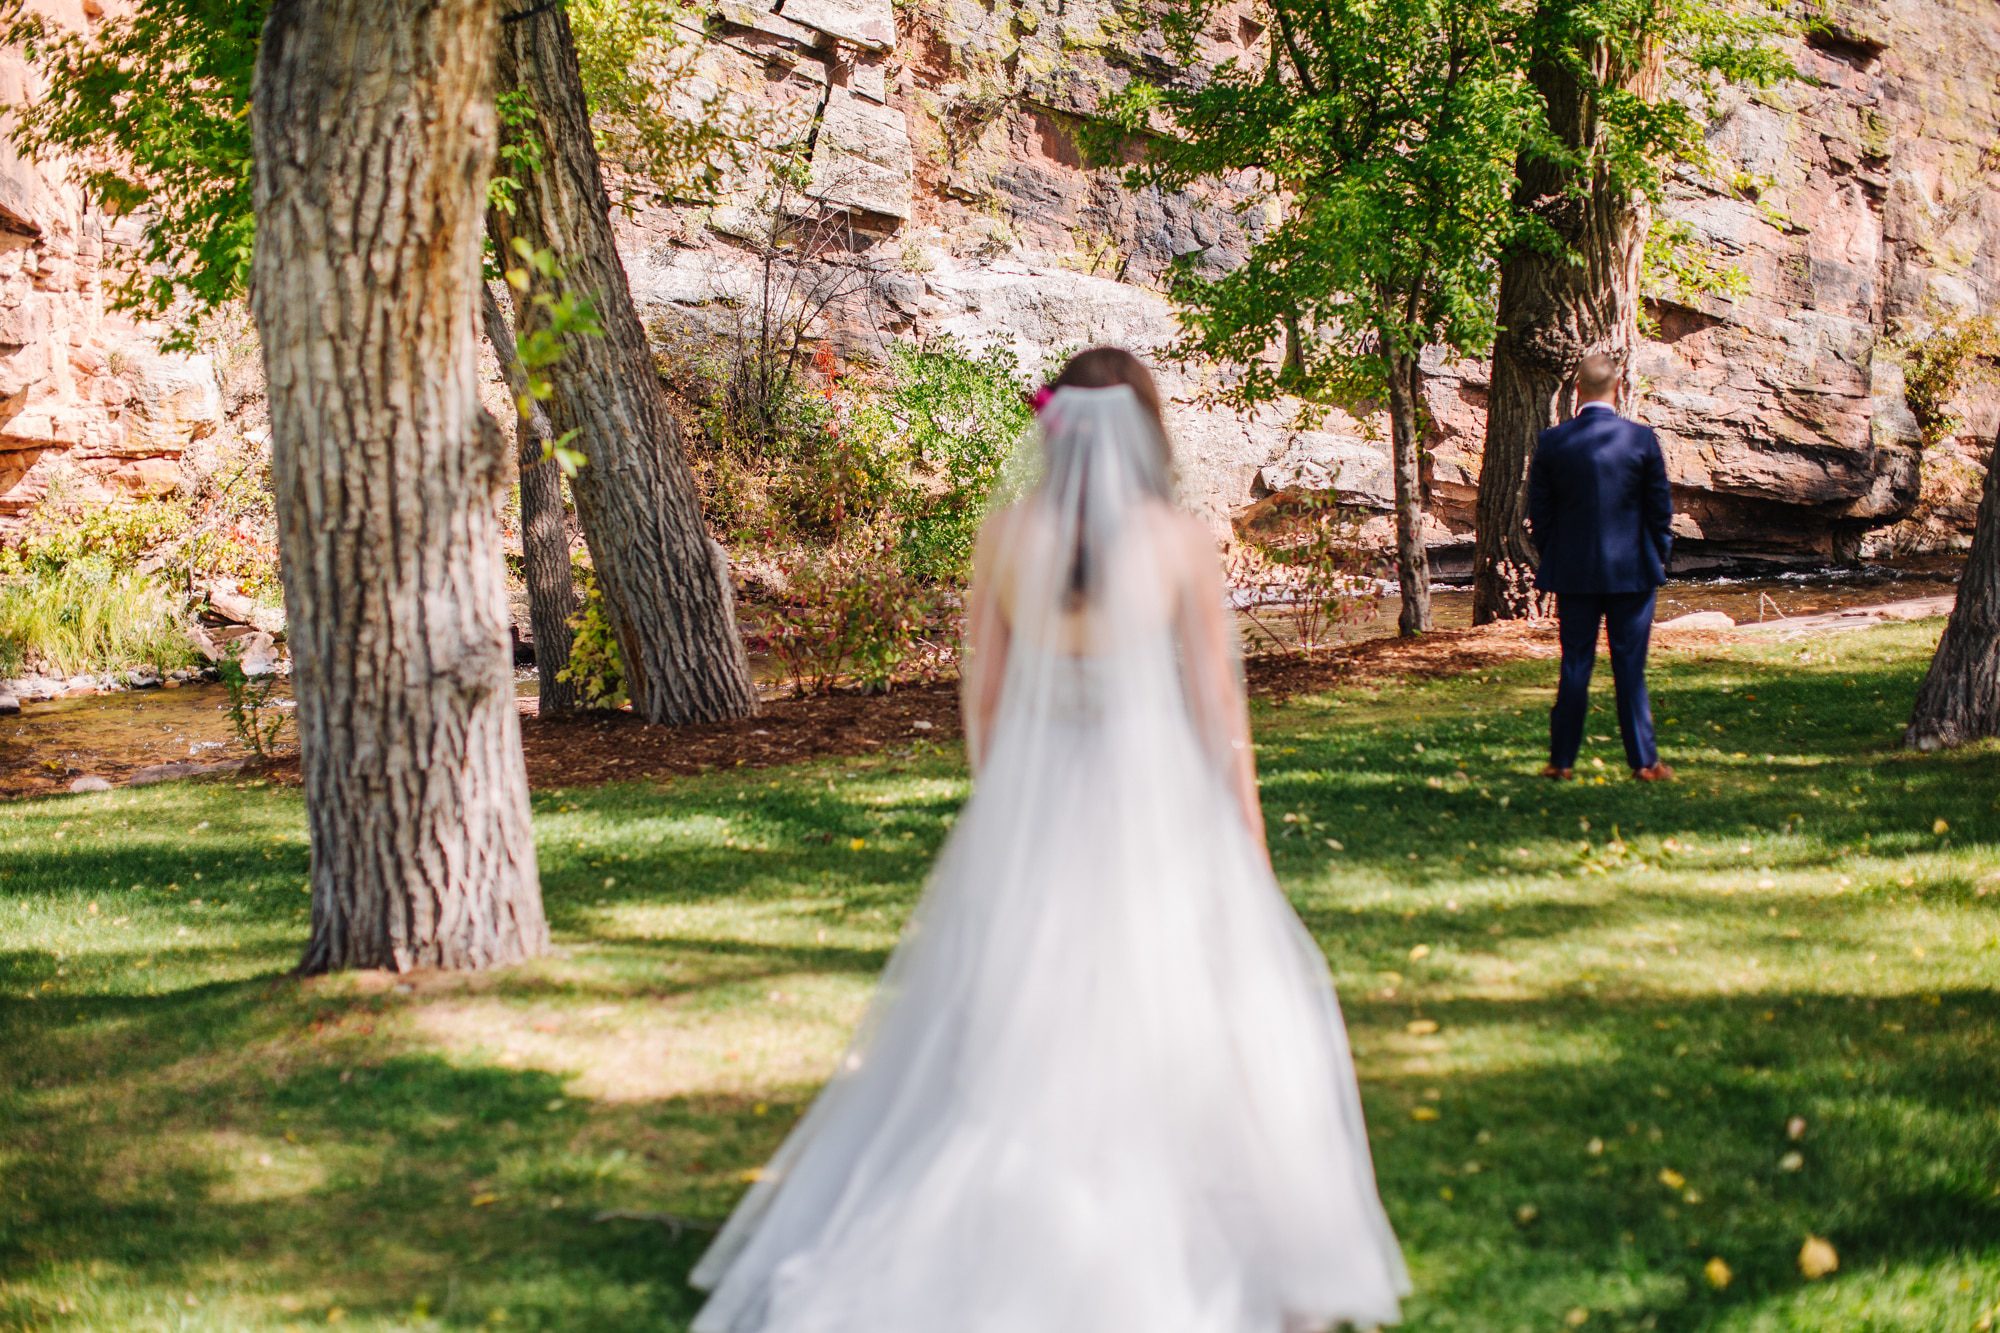 planet bluegrass, lyons colorado wedding, bride walking to first look, bride with veil, outdoor wedding, colorado wedding photographer